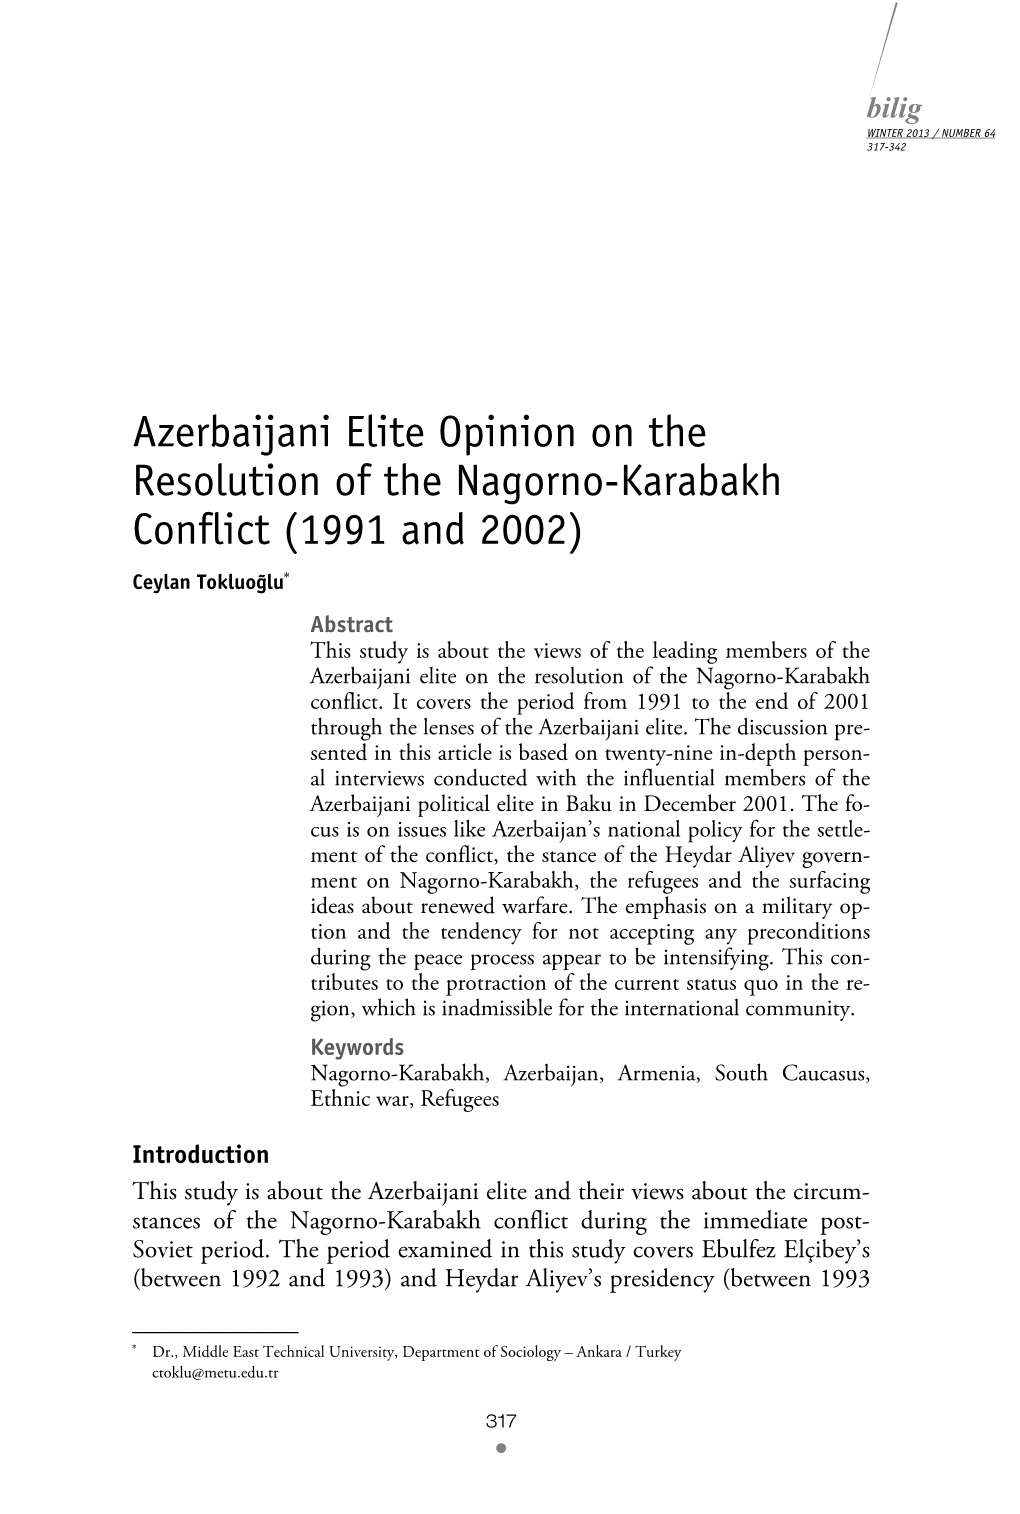 Azerbaijani Elite Opinion on the Resolution of the Nagorno-Karabakh Conflict (1991 and 2002)